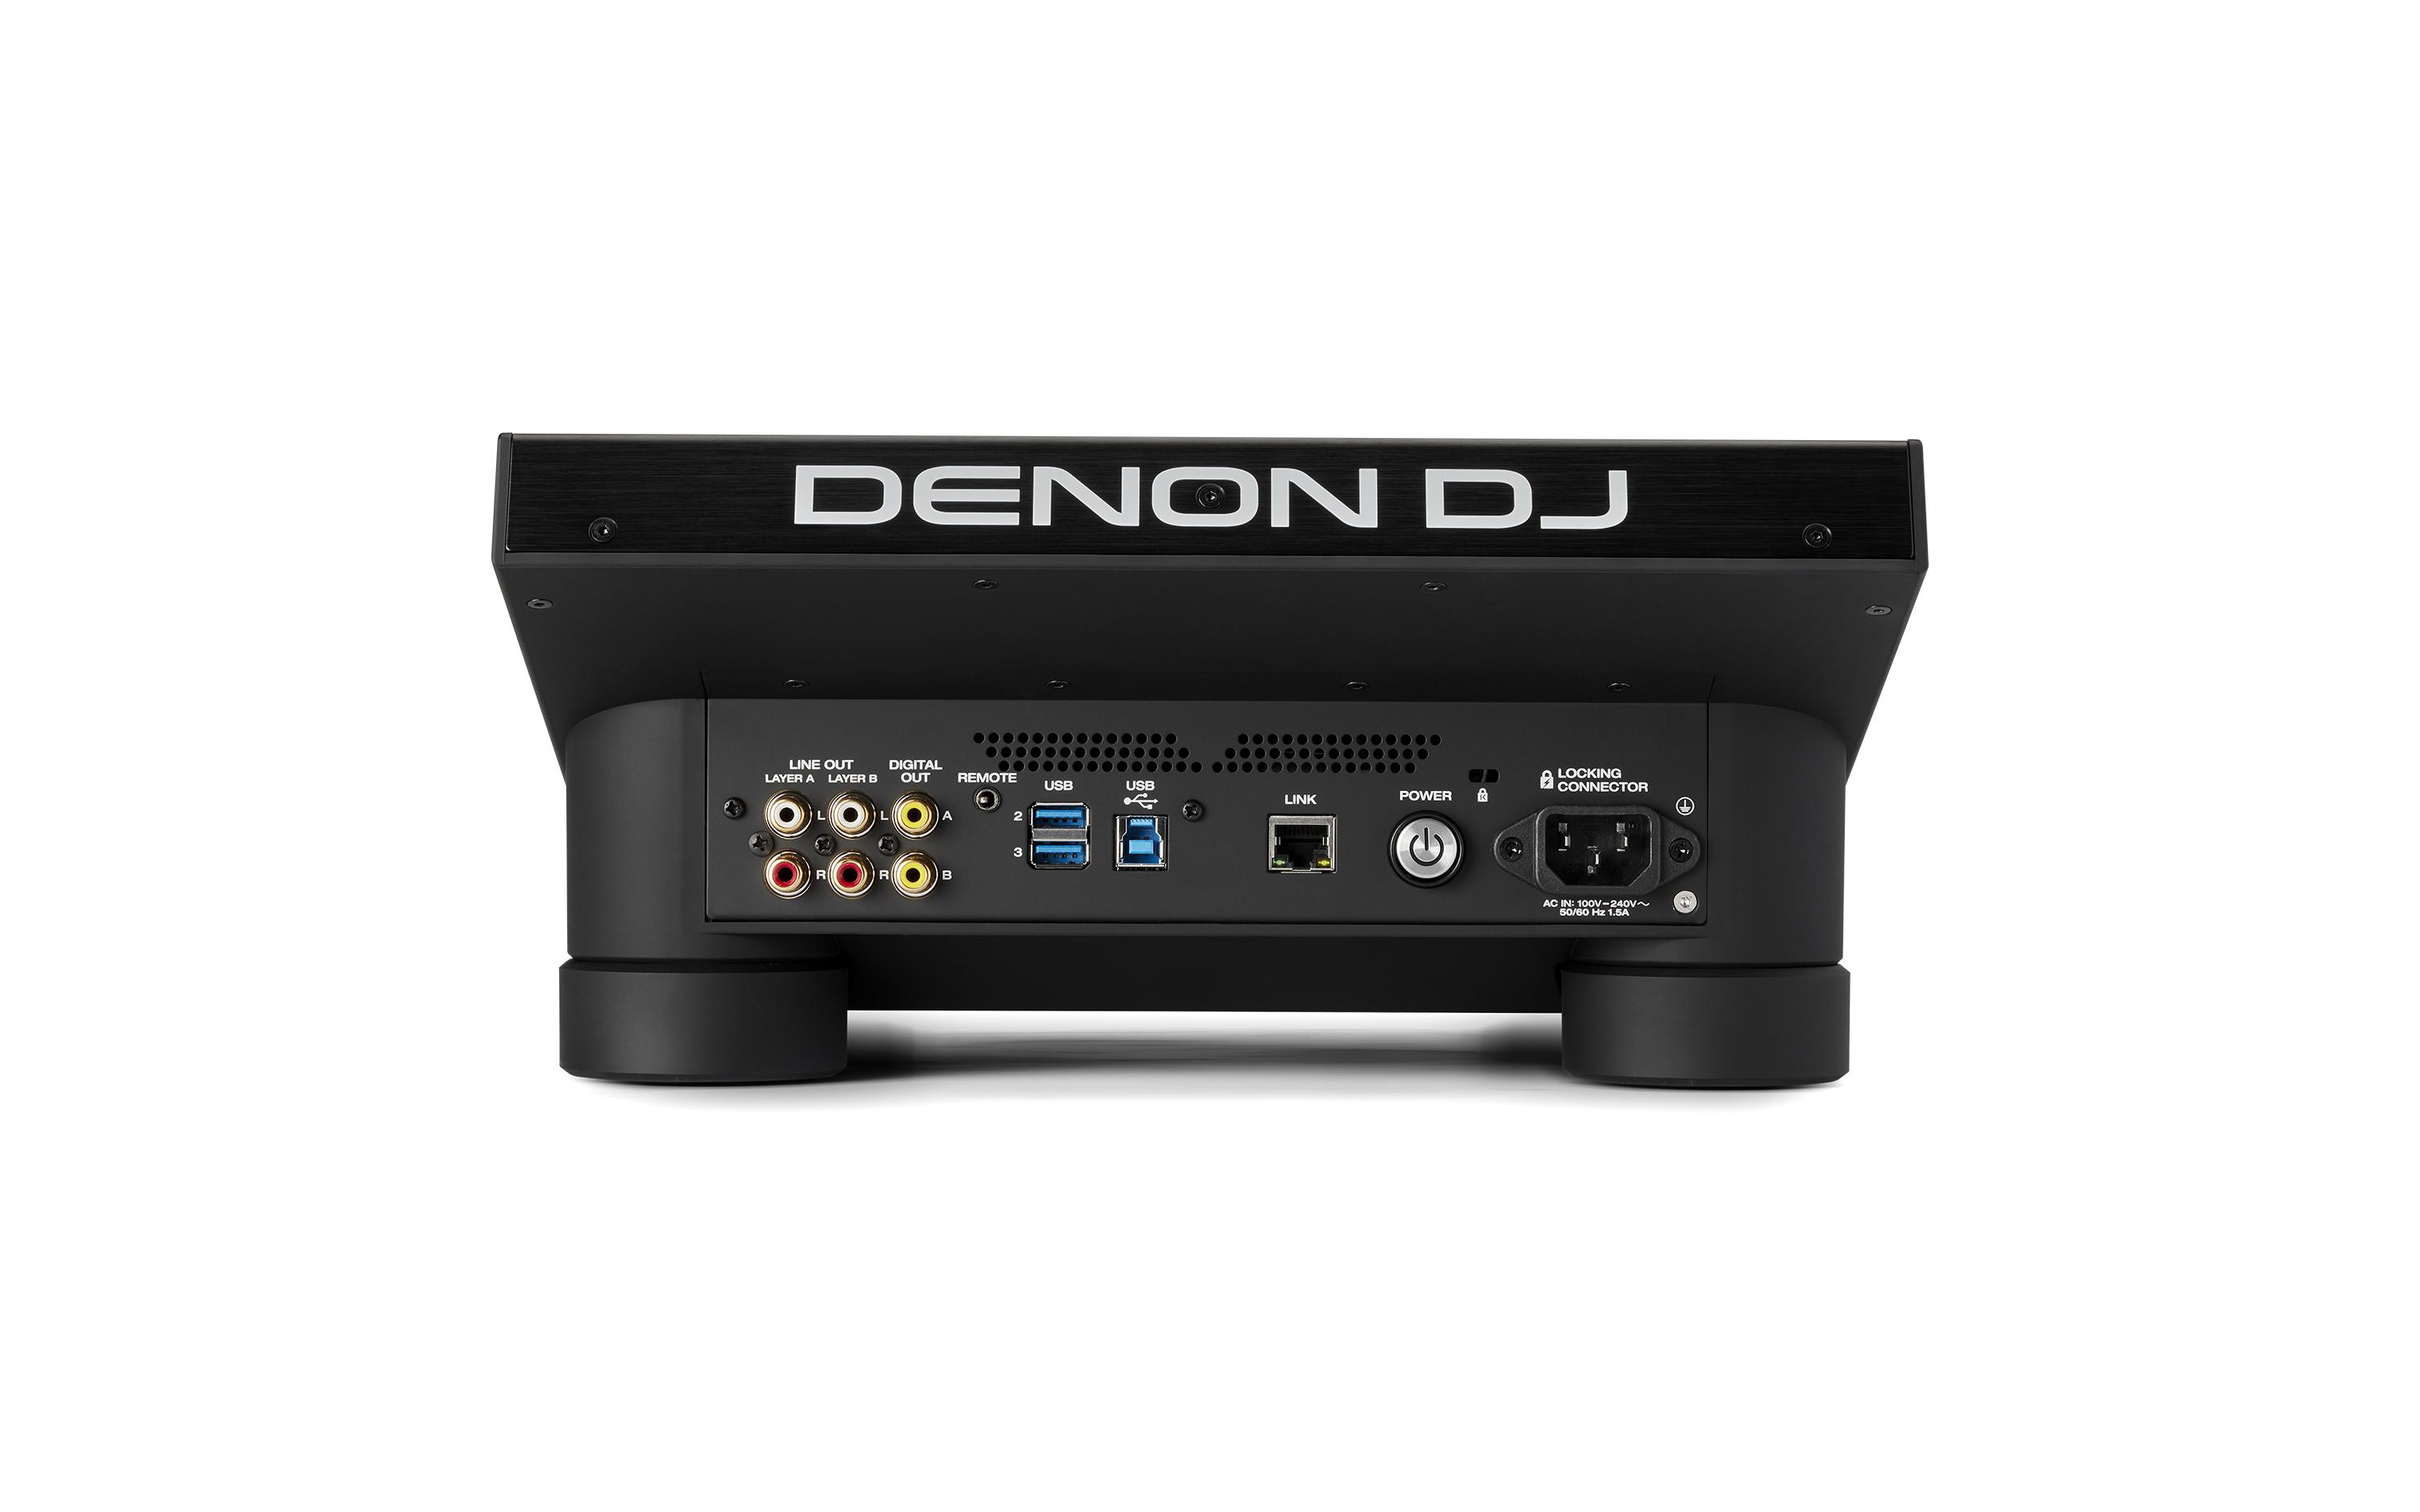 Denon DJ SC6000 back